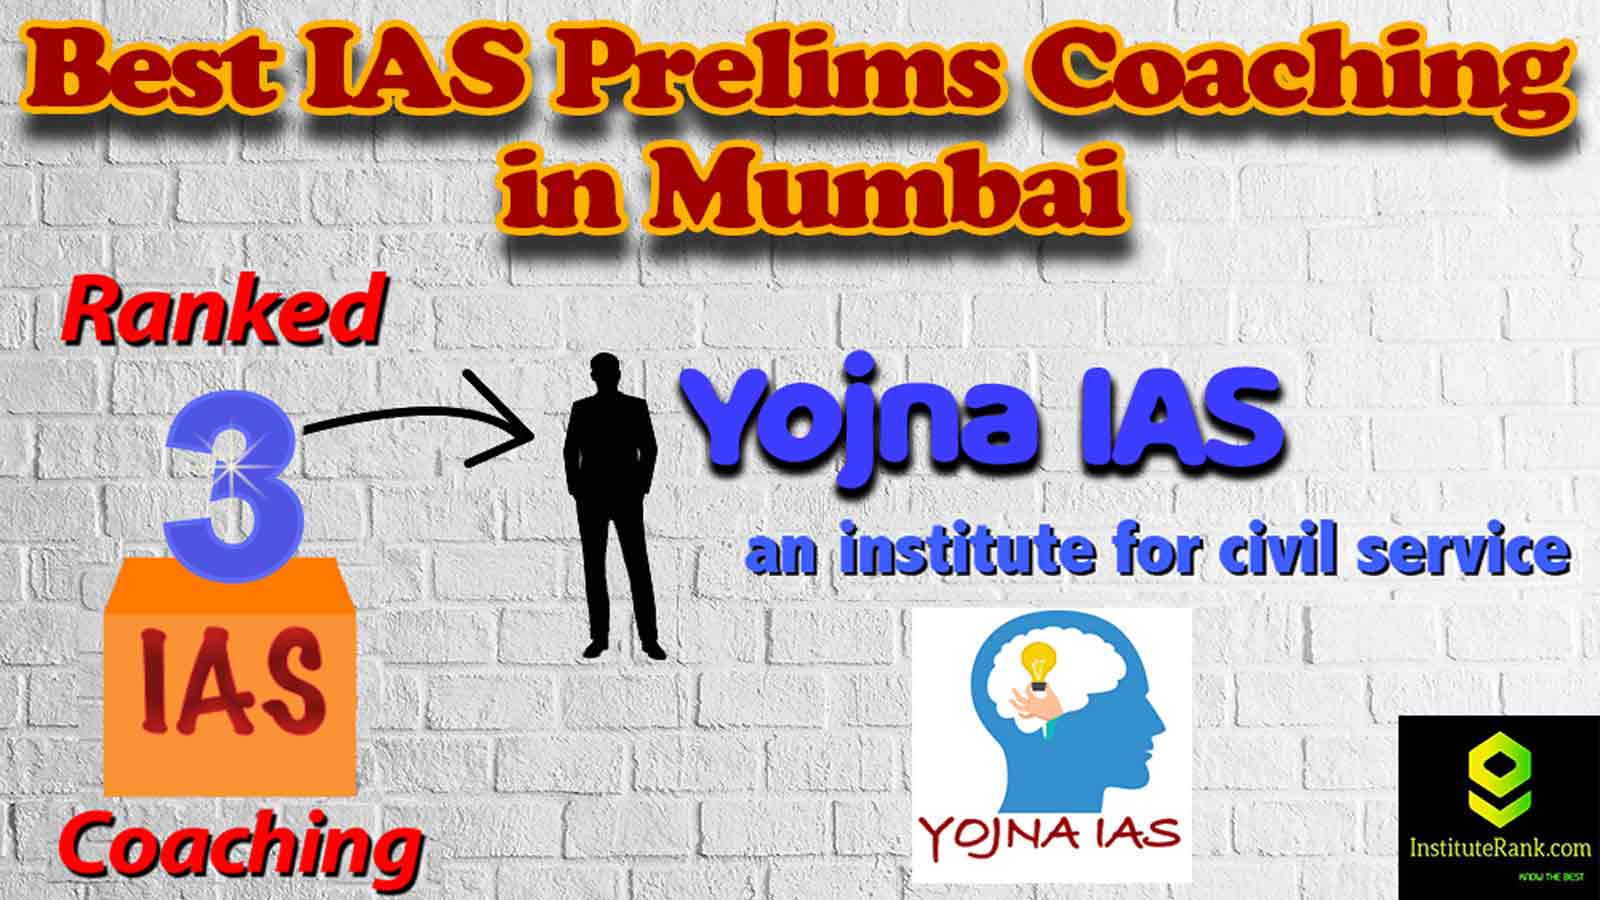 Top IAS Prelims Coaching Centre in Mumbai